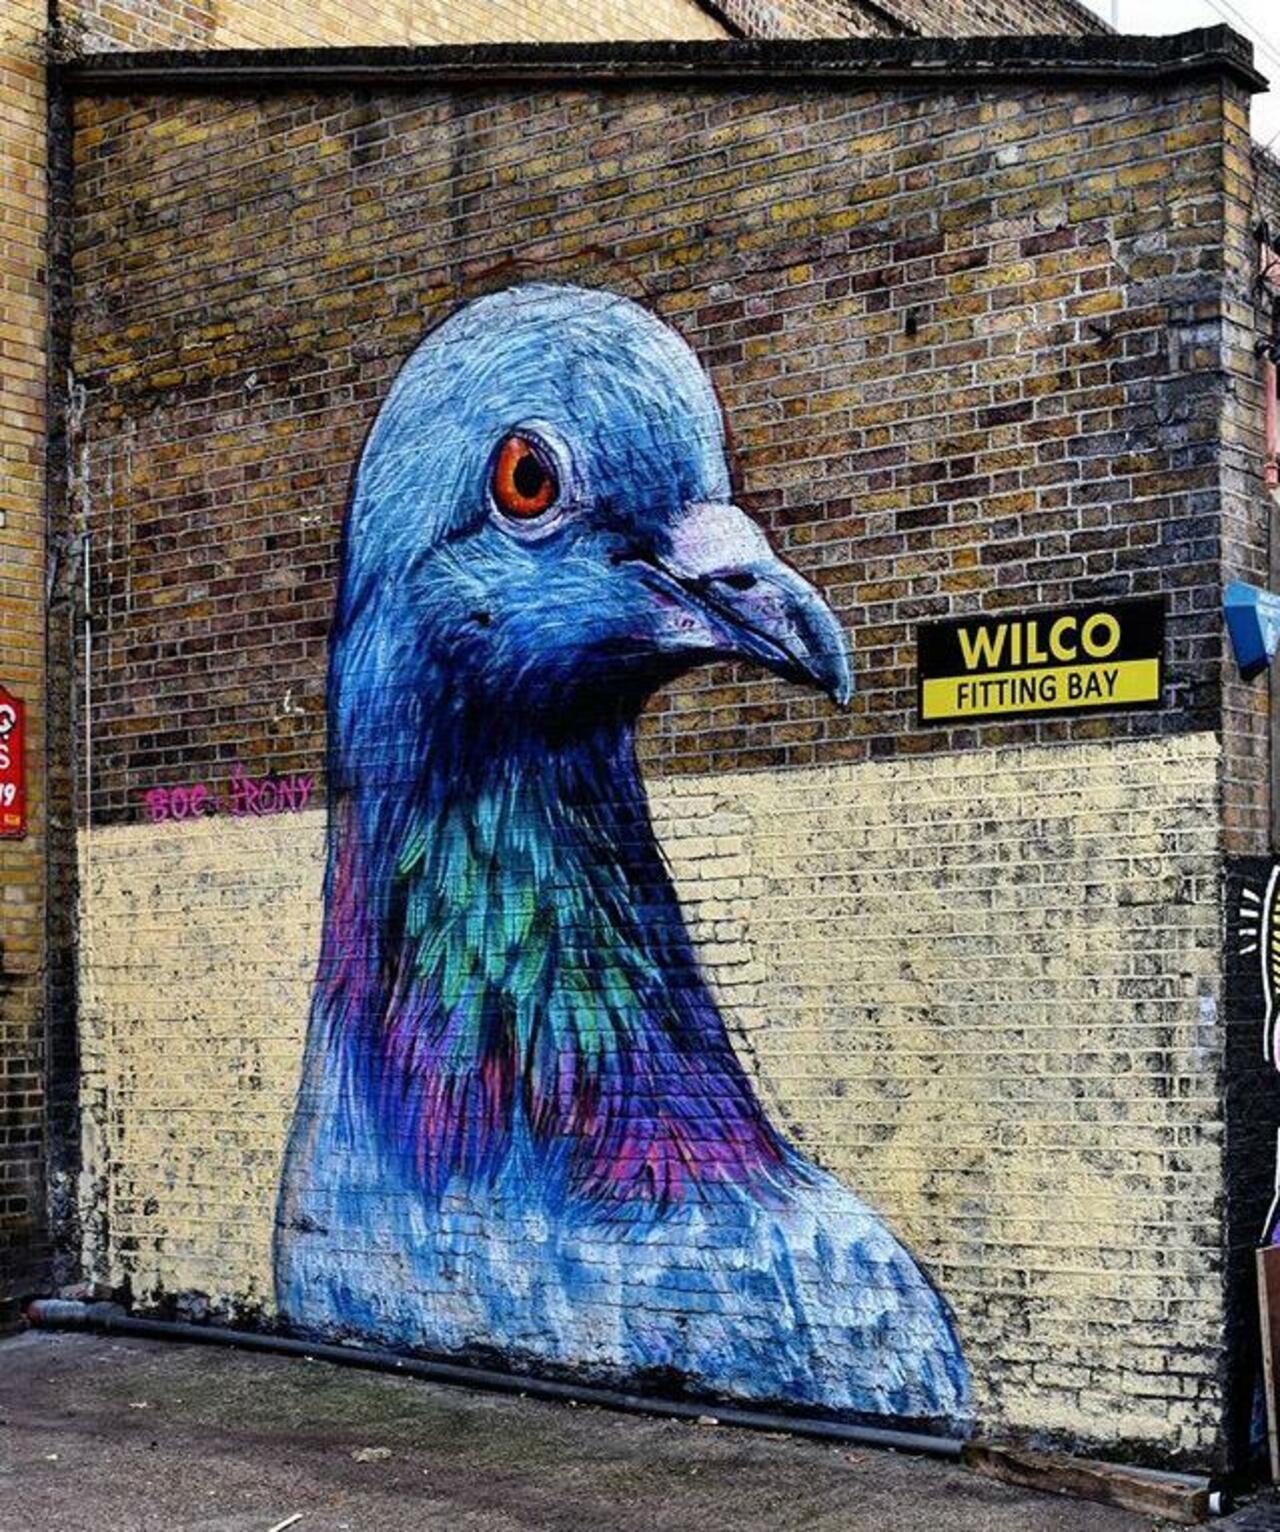 Street Art by Placee Boe & whoamirony in London 

#art #graffiti #mural #streetart http://t.co/eK1ICwxkP7